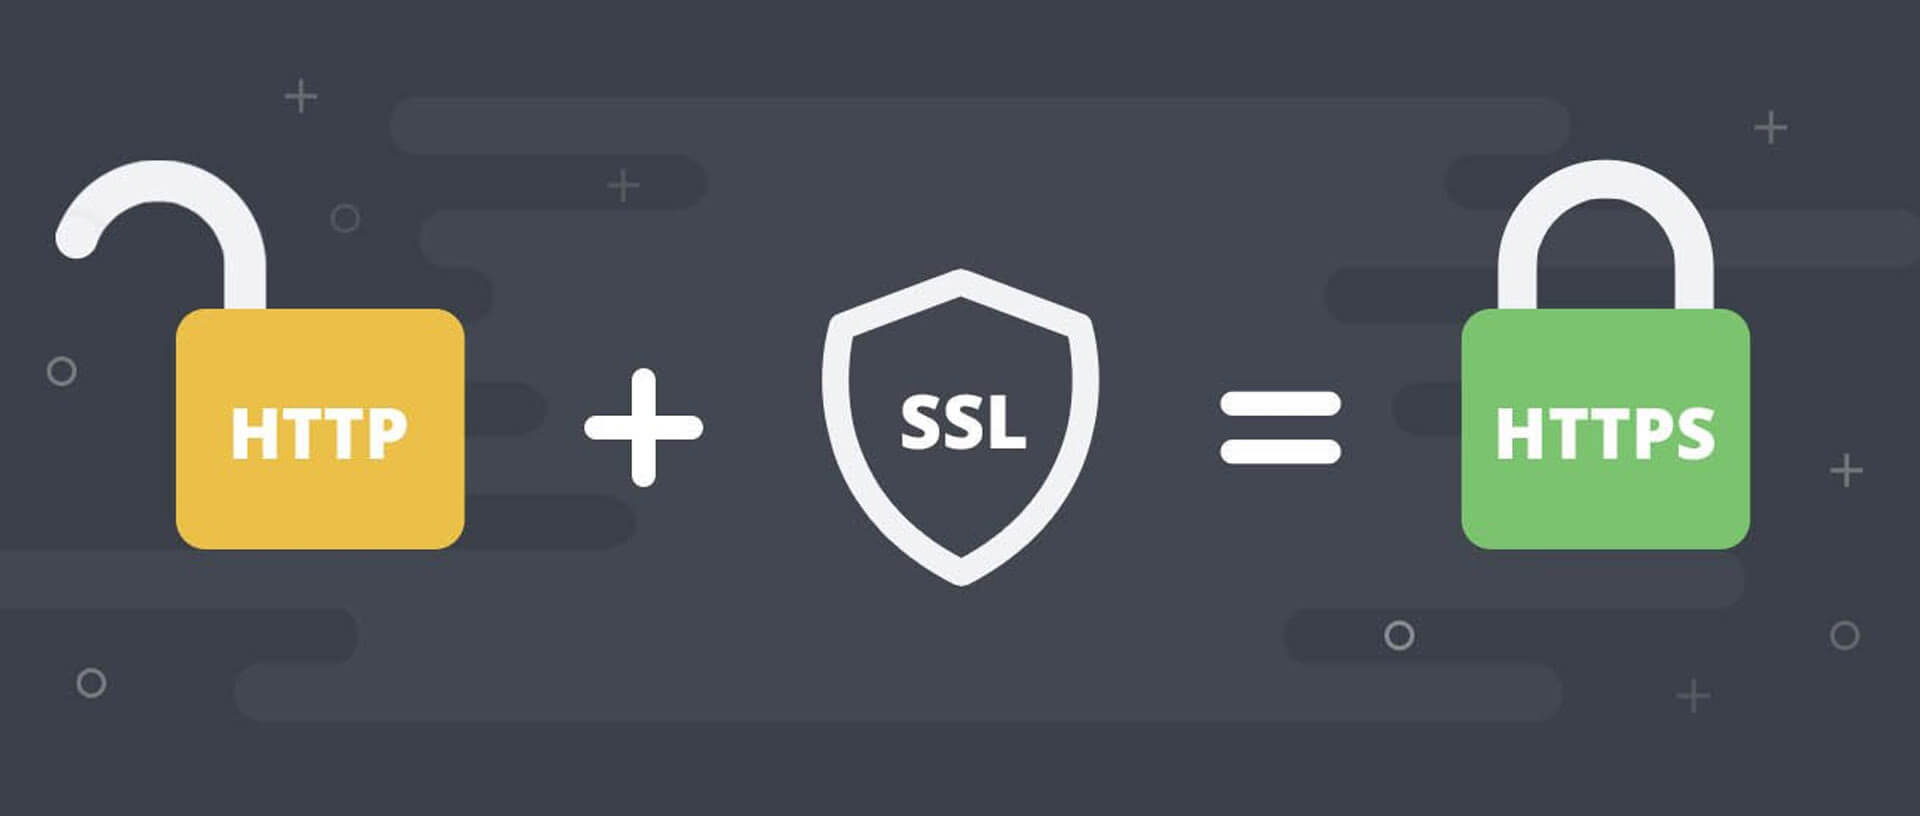 P https blog. ////Https:///https:///. SSL сертификат. SSL сертификат картинки. Нттрто.